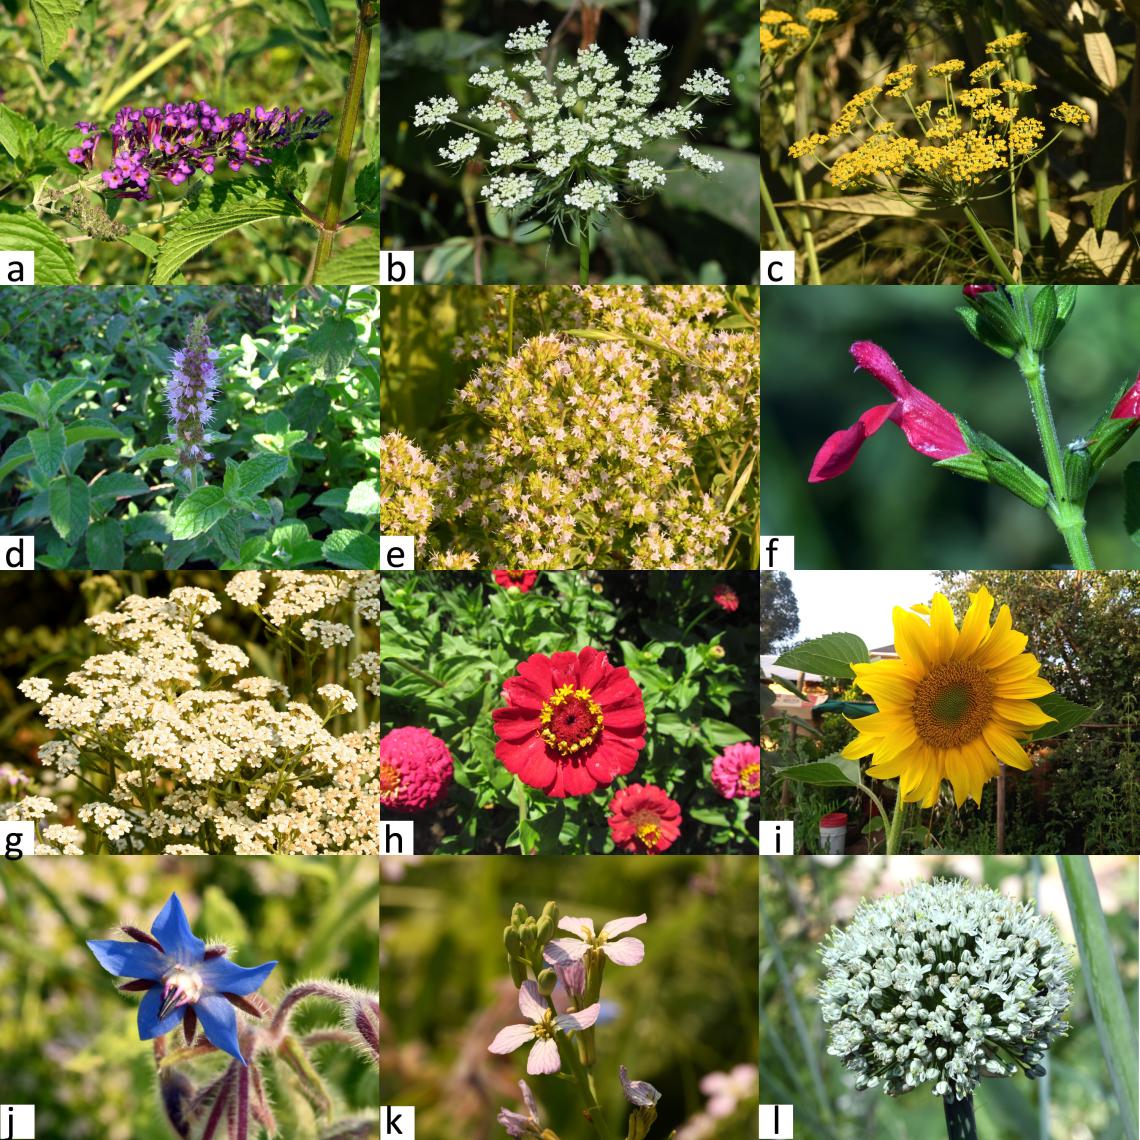 Figura 7. Algunas plantas exóticas atractivas para insectos. Árbol de las mariposas (a), zanahoria (b), hinojo (c), menta (d), orégano (e), salvia (f), milenrama (g), zinnia (h), girasol (i), borraja (j), rábano (k), cebolla (l). 